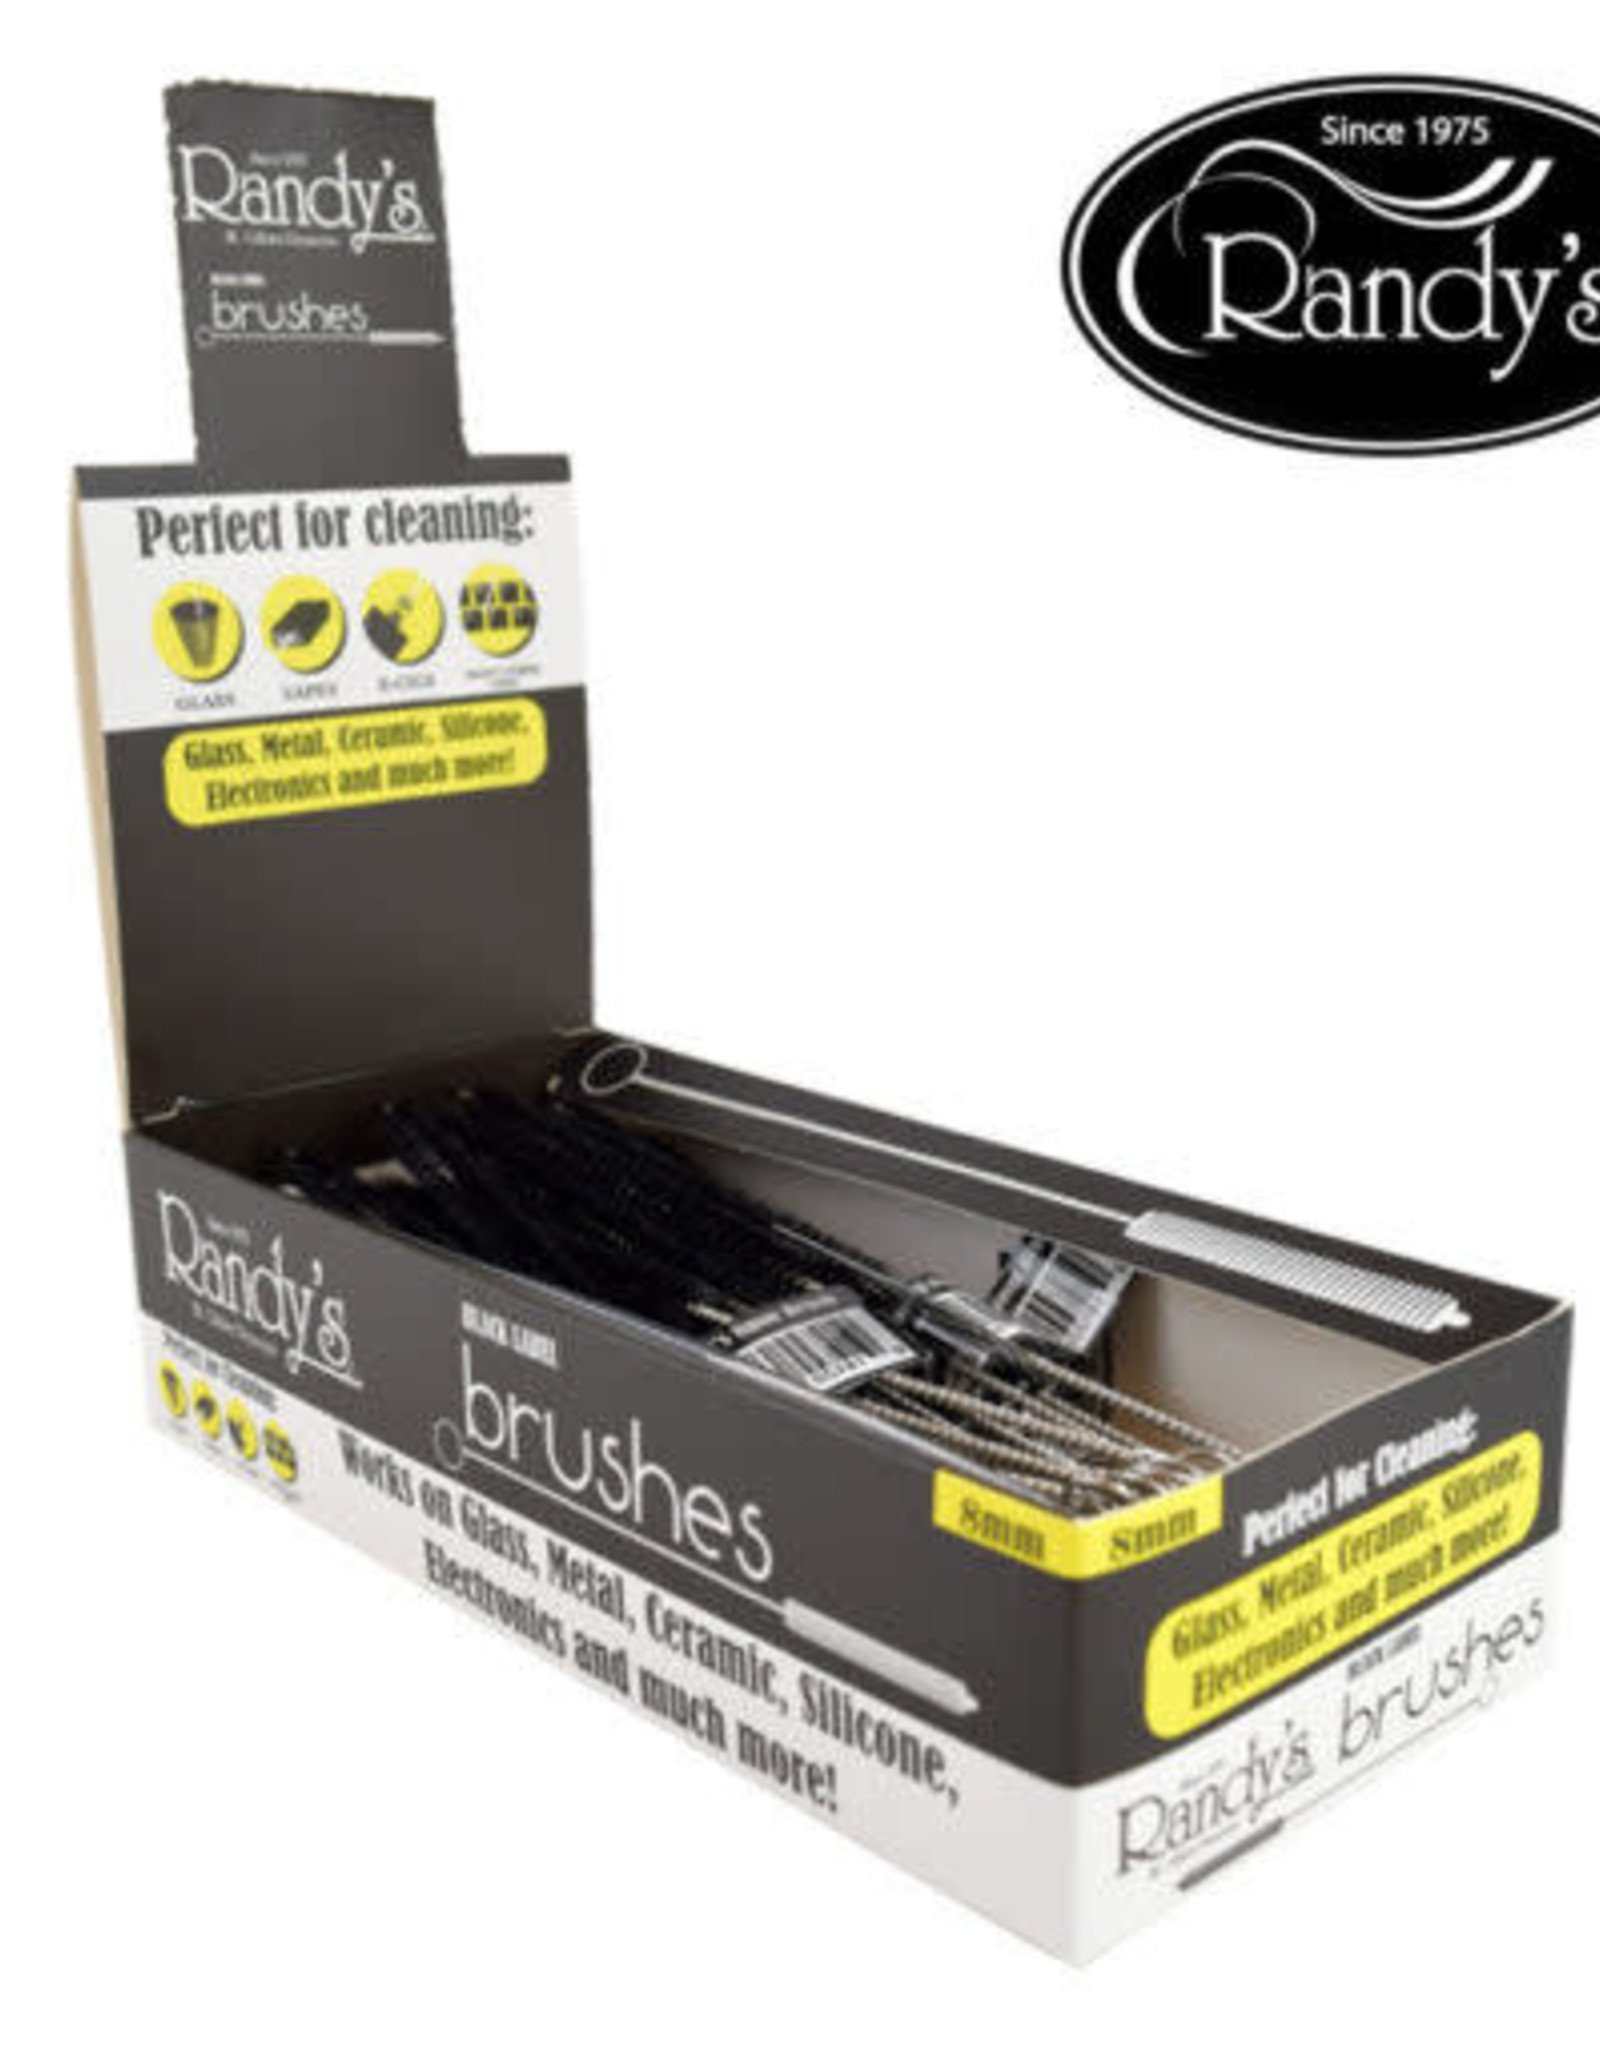 Randy's BLACK LABEL 8mm BRUSHES